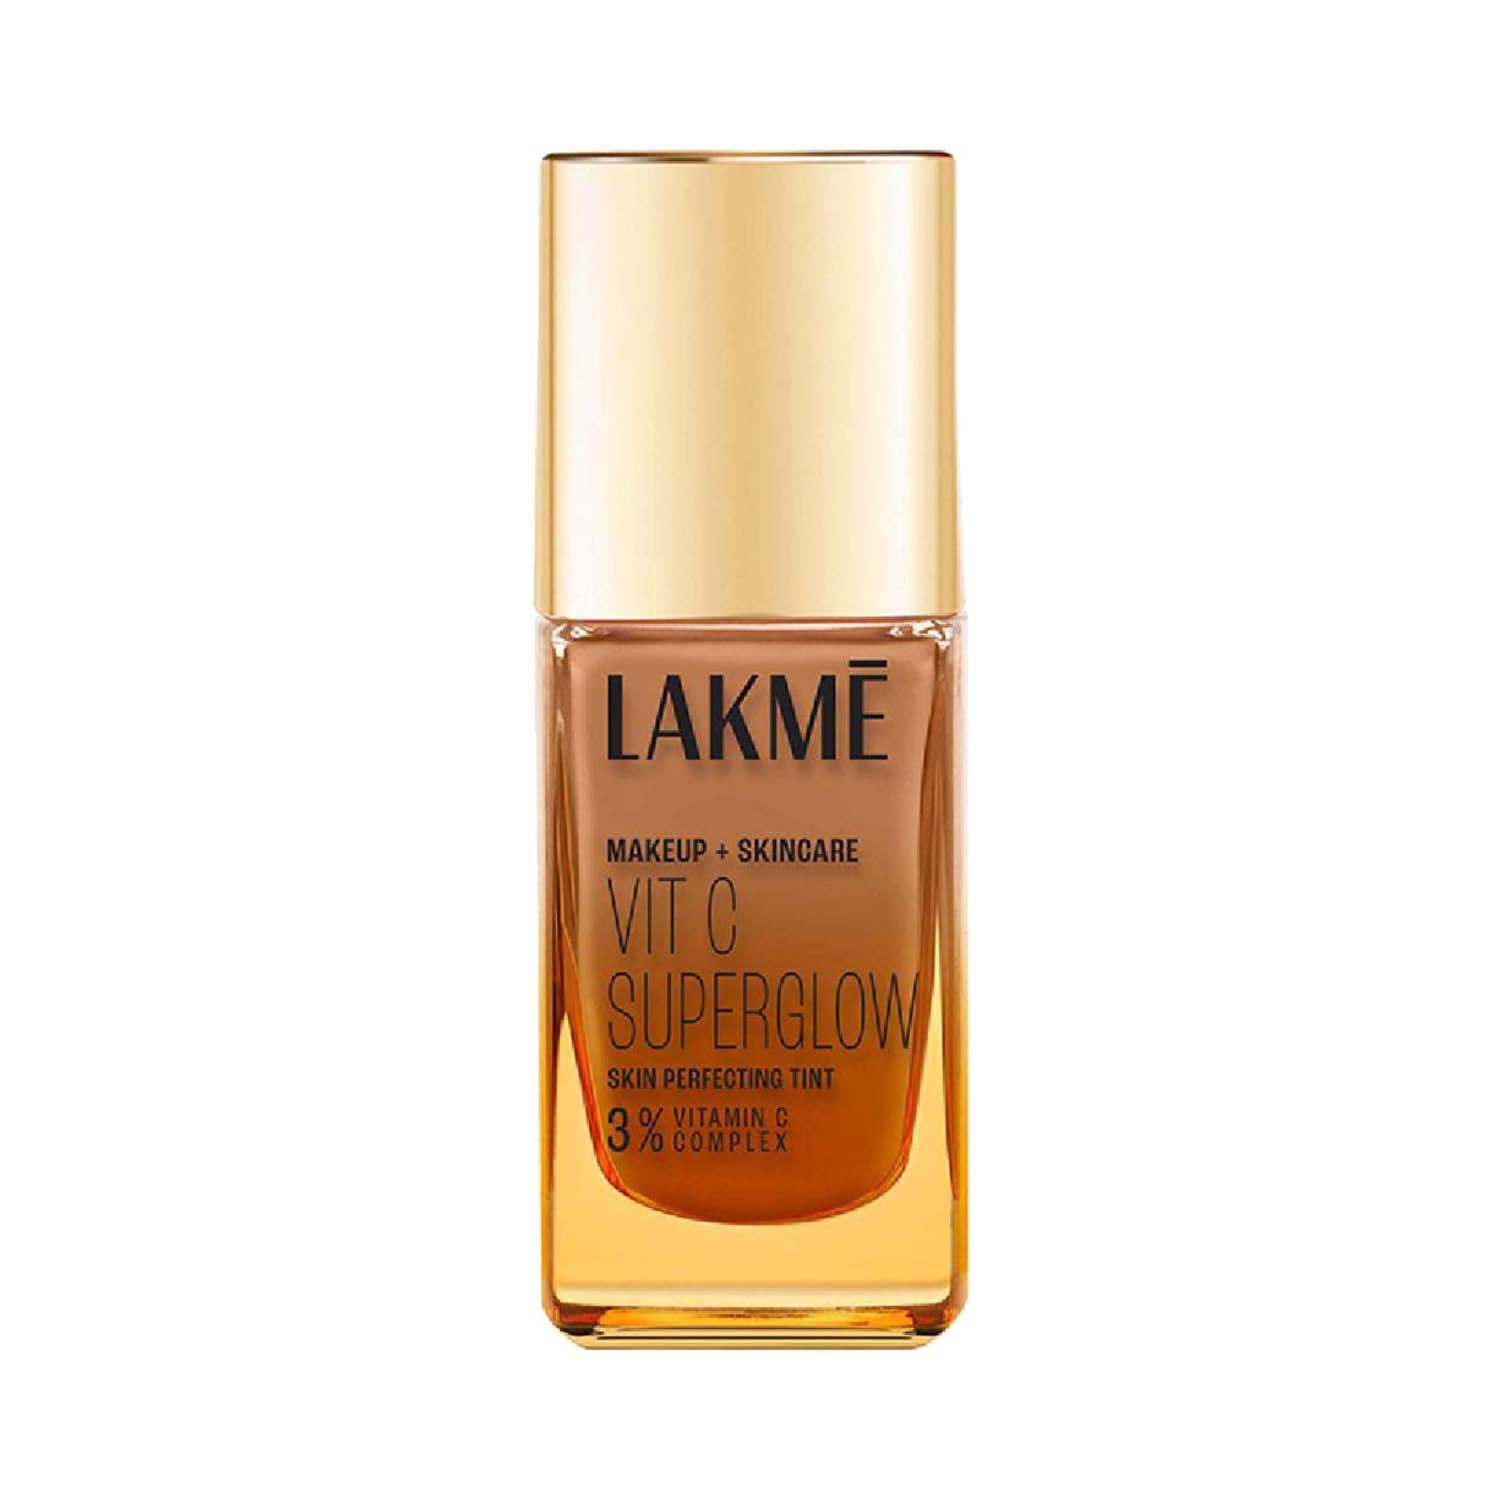 Lakme | Lakme Makeup+Skincare Vit C Superglow Skin Perfecting Tint - Cool Walnut C380 (25 ml)